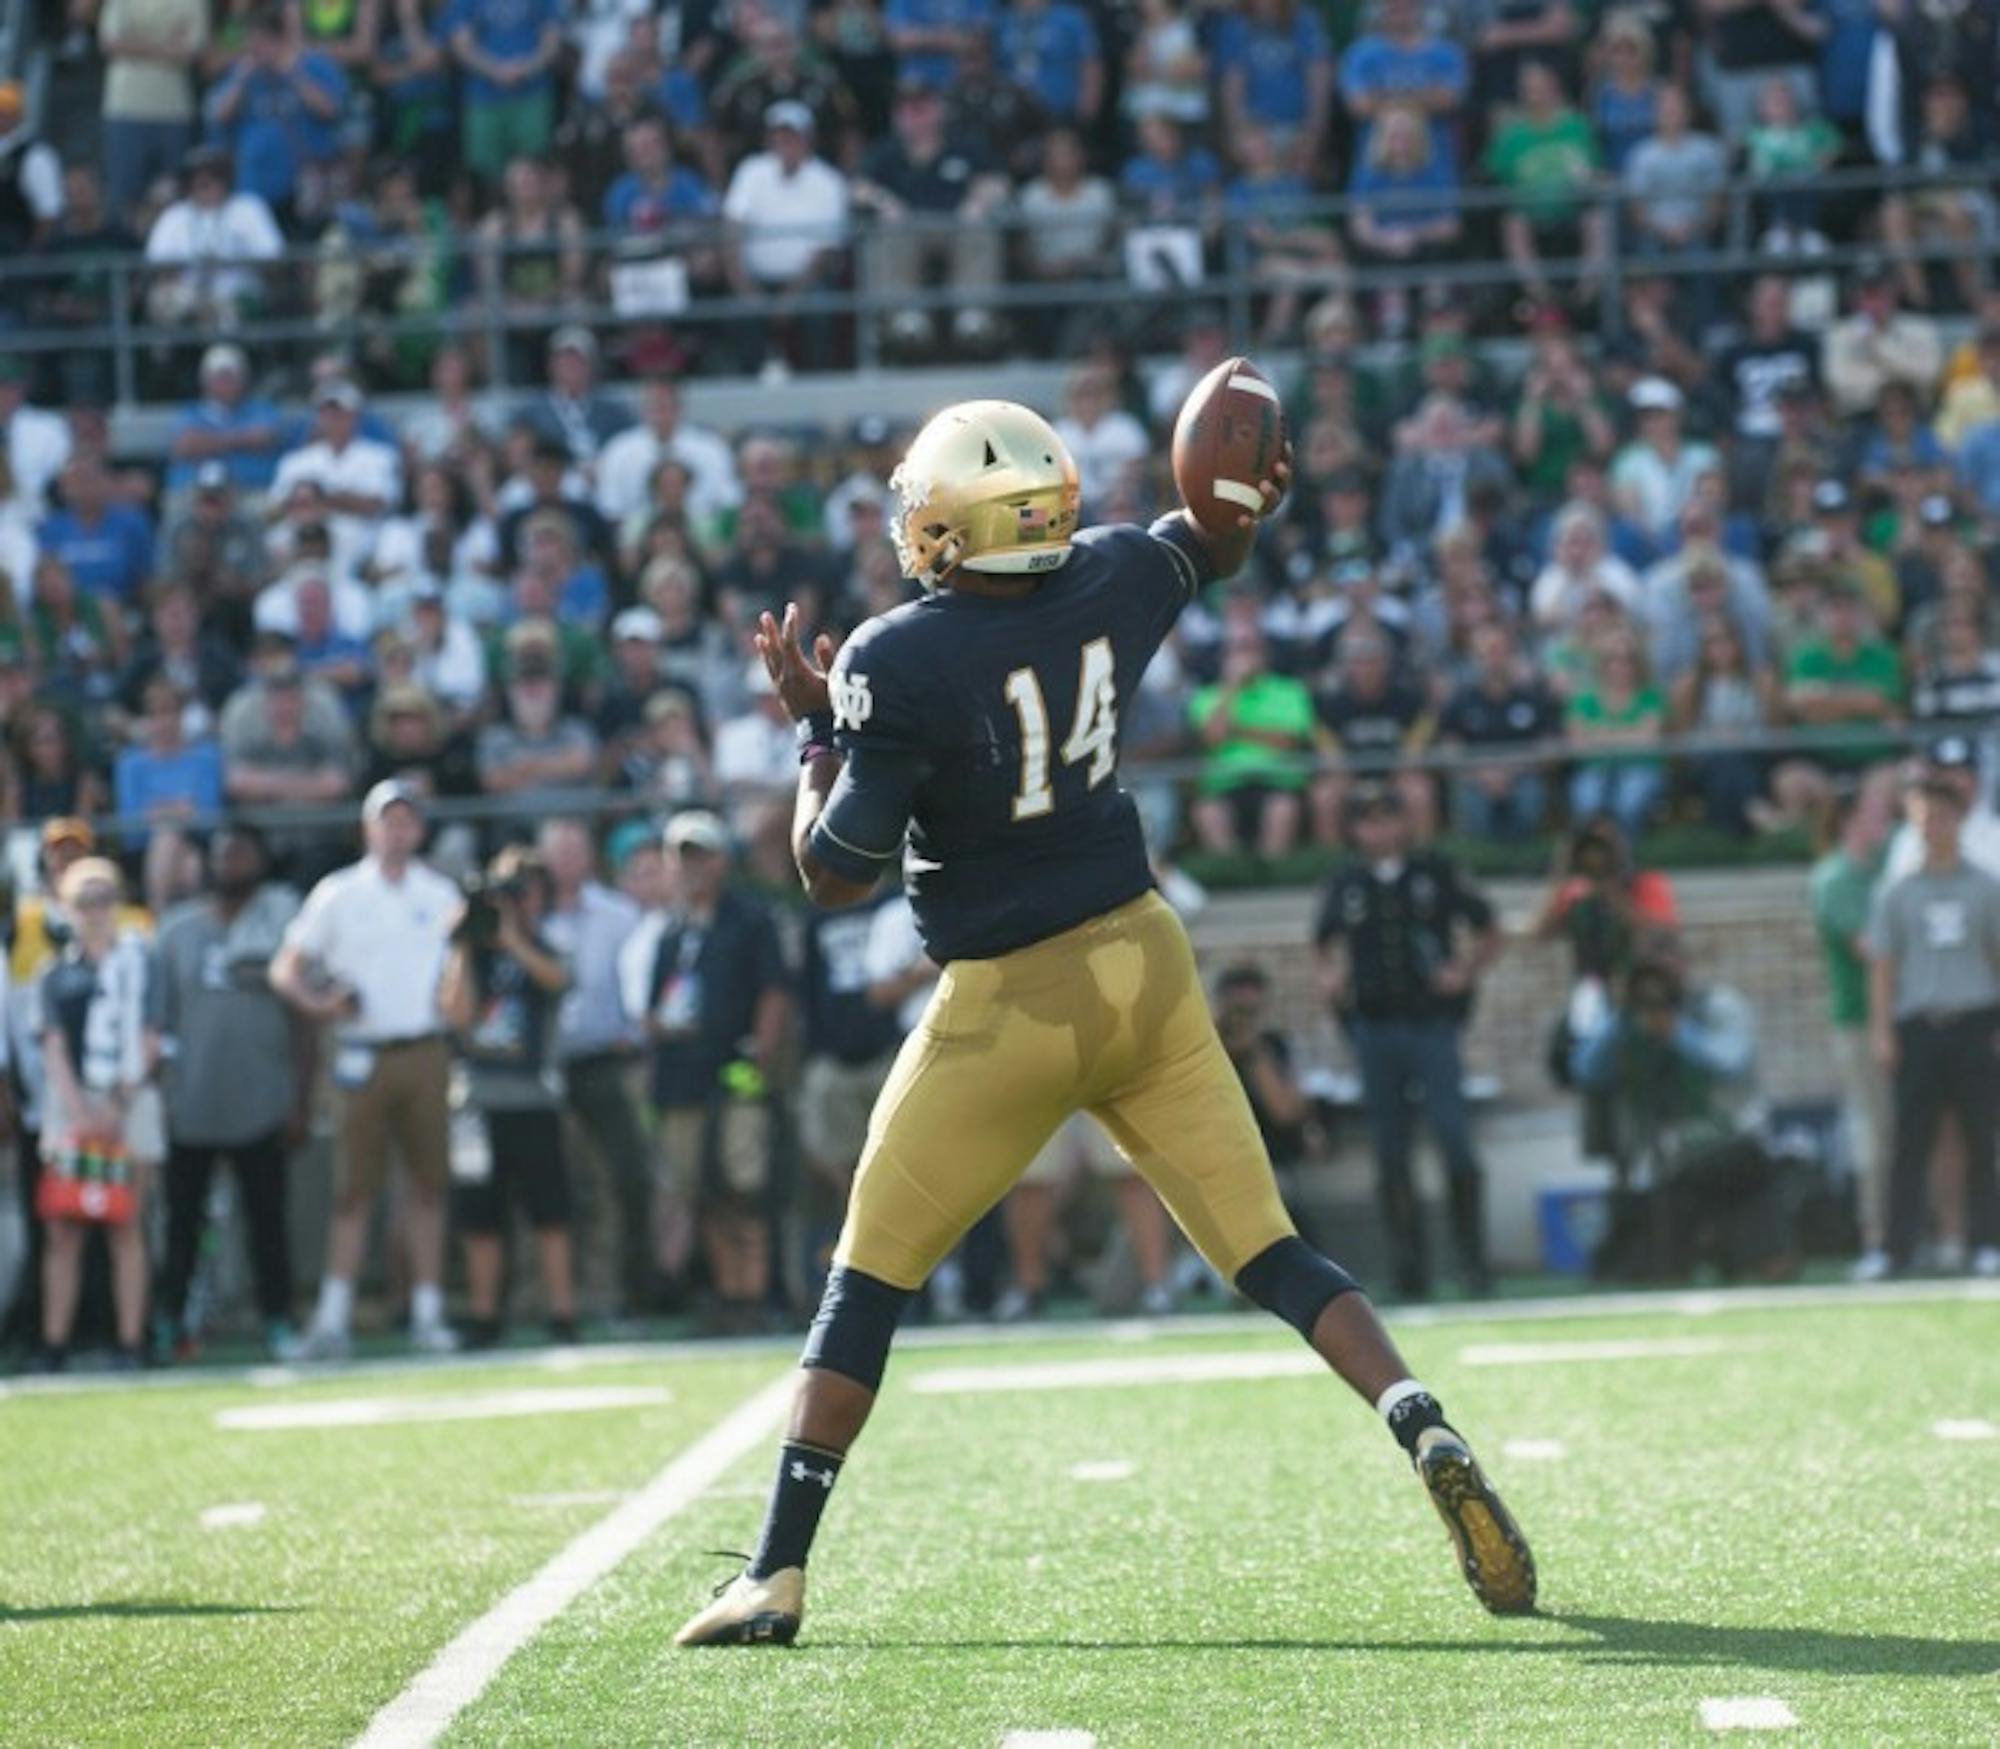 Notre Dame junior quarterback DeShone Kizer fires a pass during Notre Dame’s 38-35 loss to Duke on Saturday.